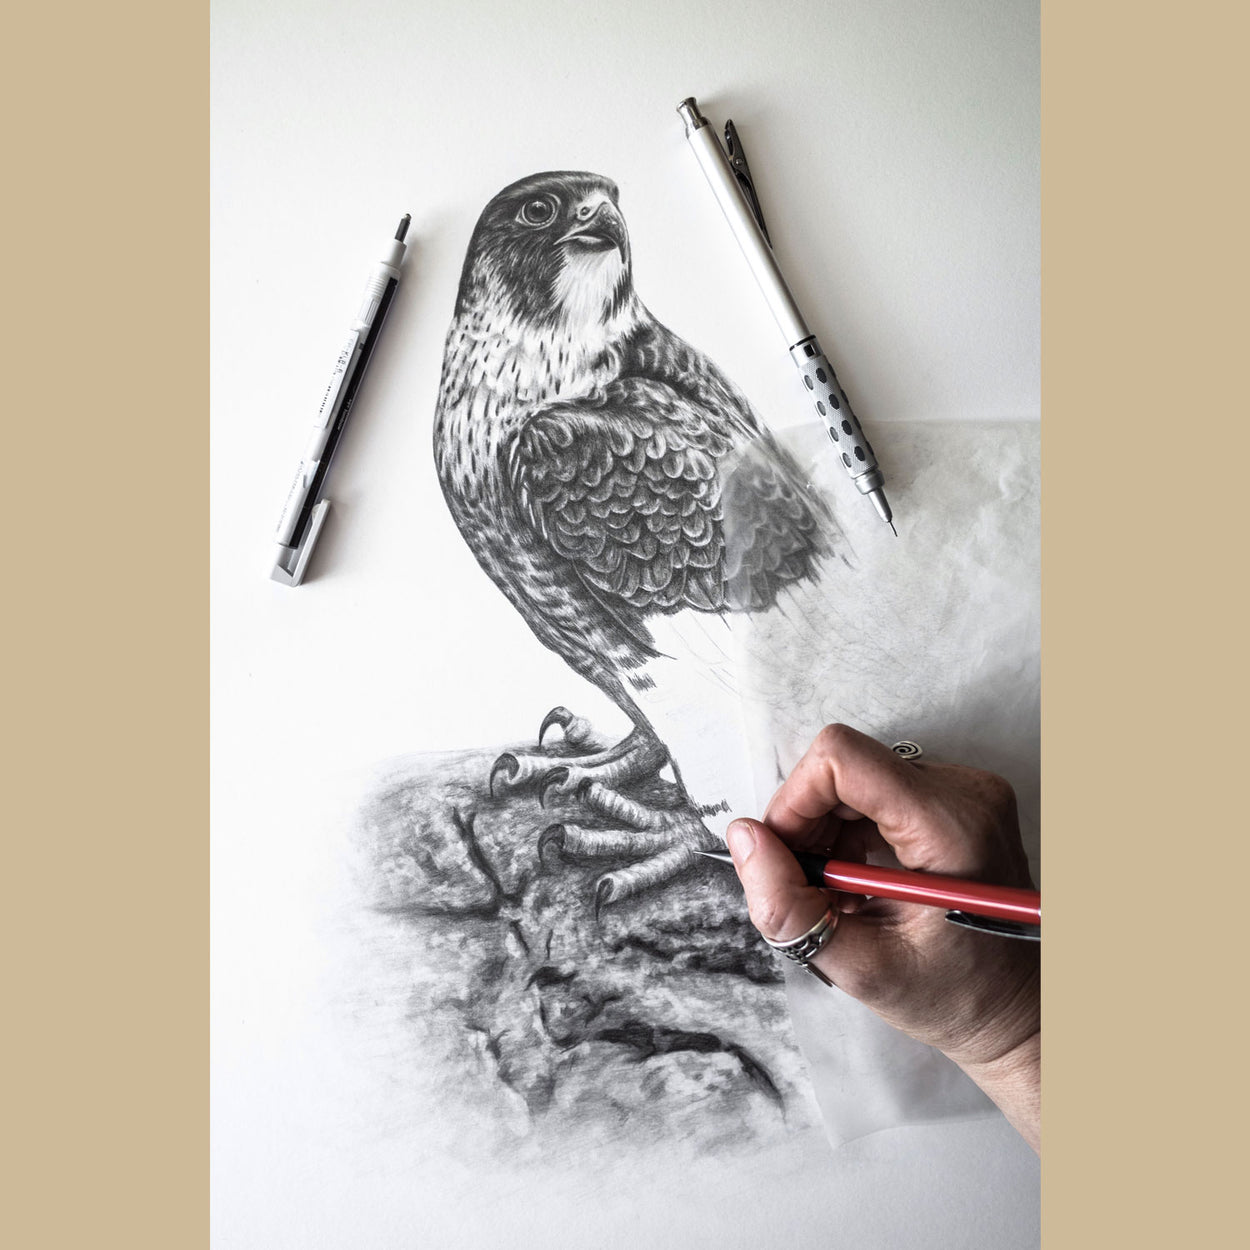 Peregrine Bird of Prey Drawing Work in Progress - The Thriving Wild